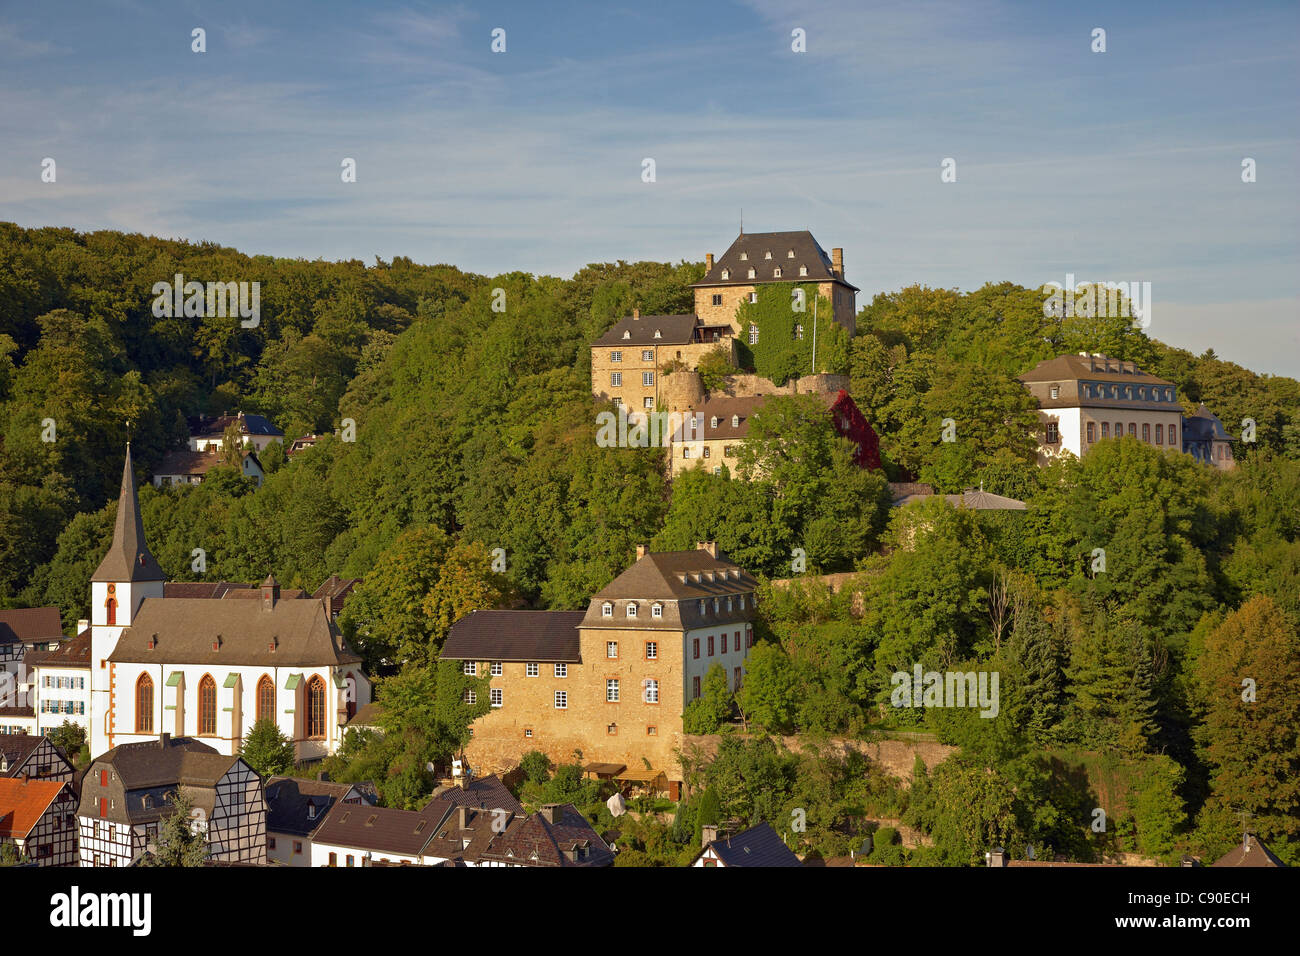 Castello, casa in legno e muratura, chiesa, S. Mariae assunta, Blankenheim, Eifel, Renania settentrionale-Vestfalia, Germania, Europa Foto Stock